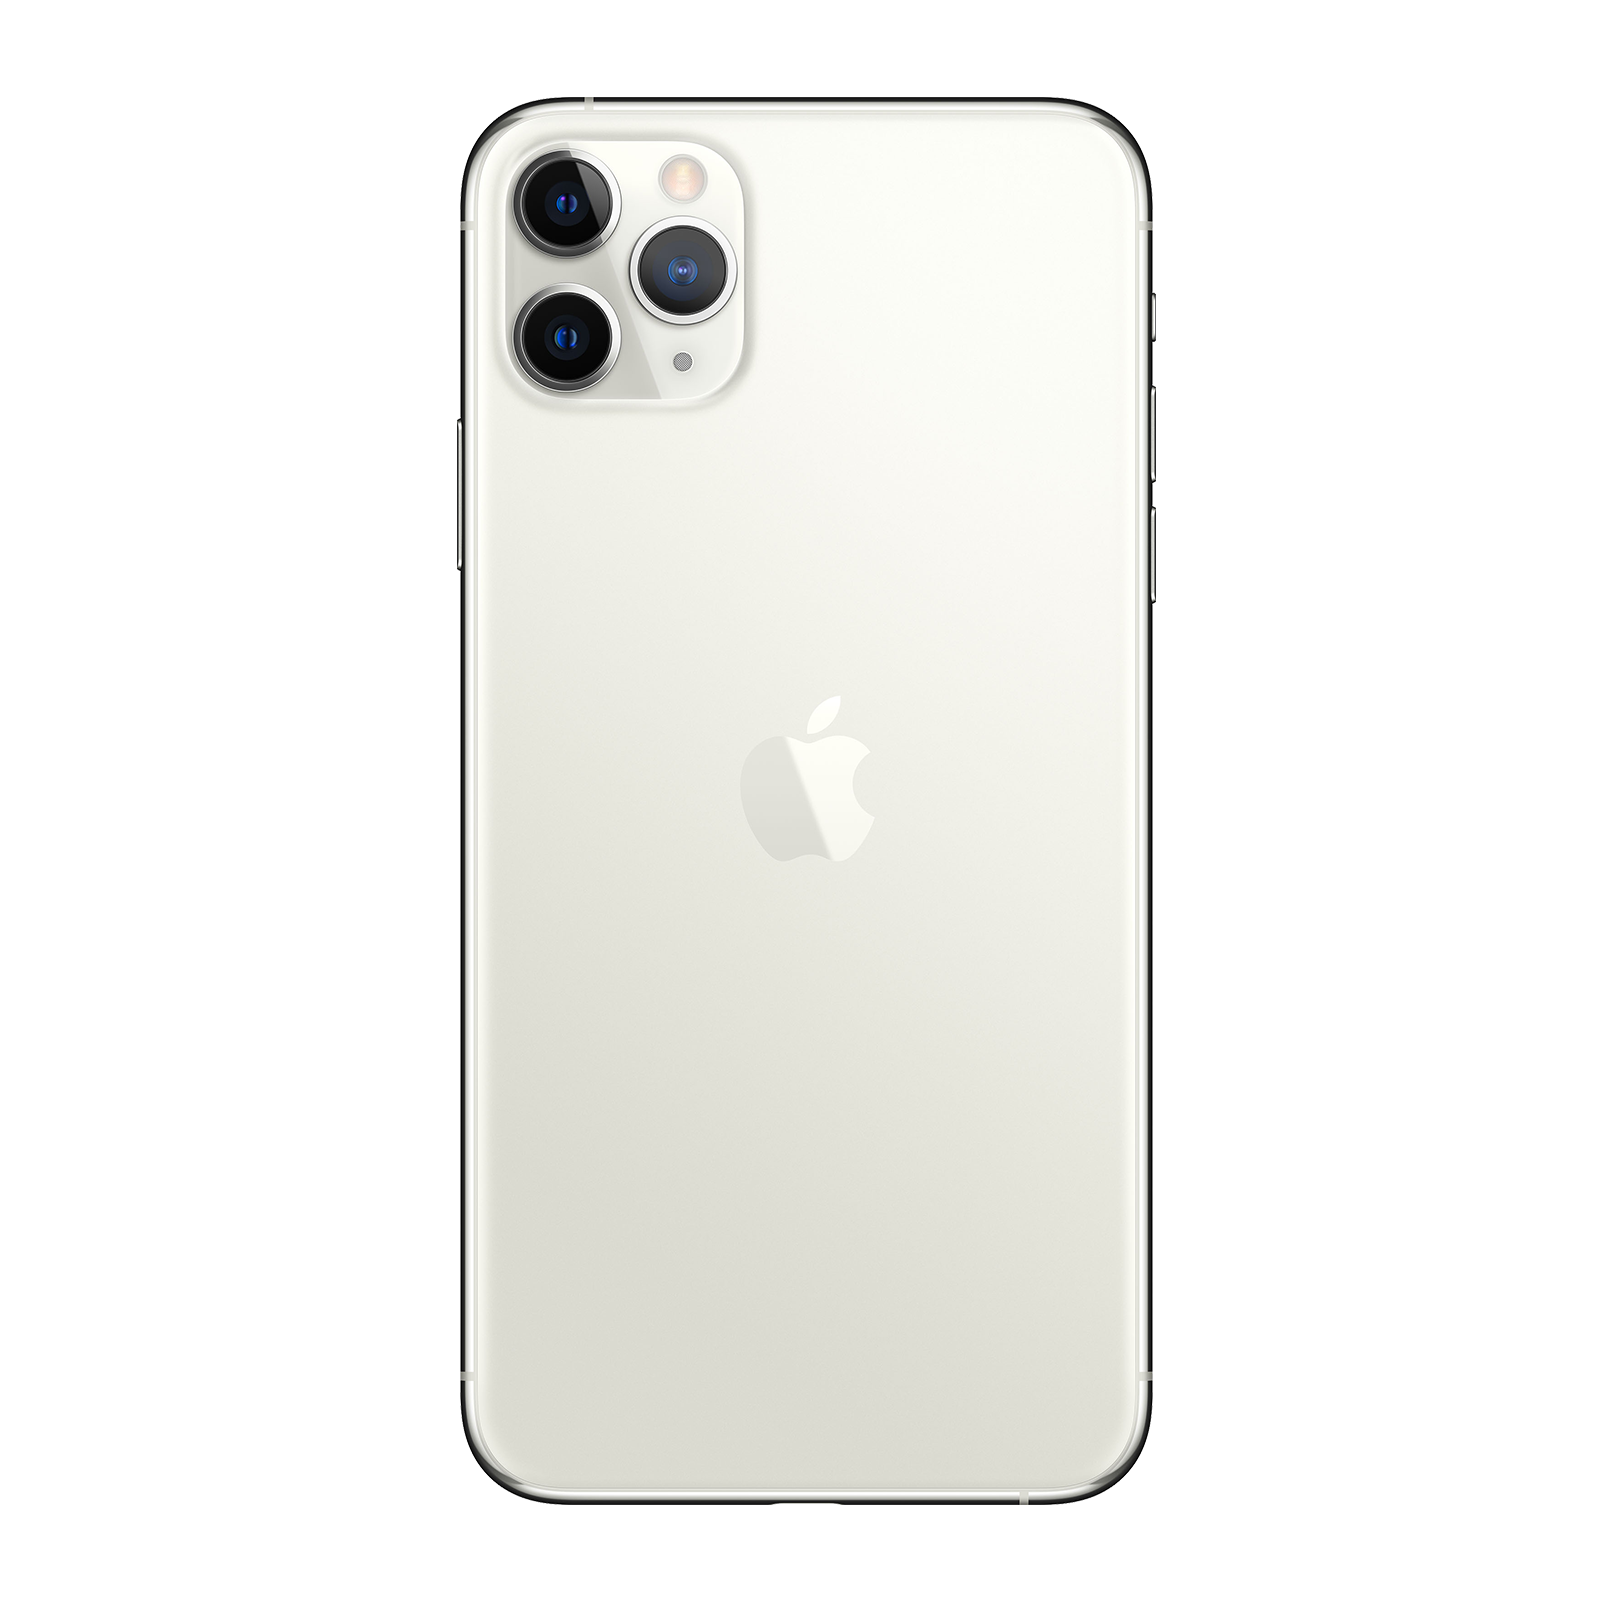 Apple iPhone 11 Pro Max 64GB Silver Very Good - Verizon